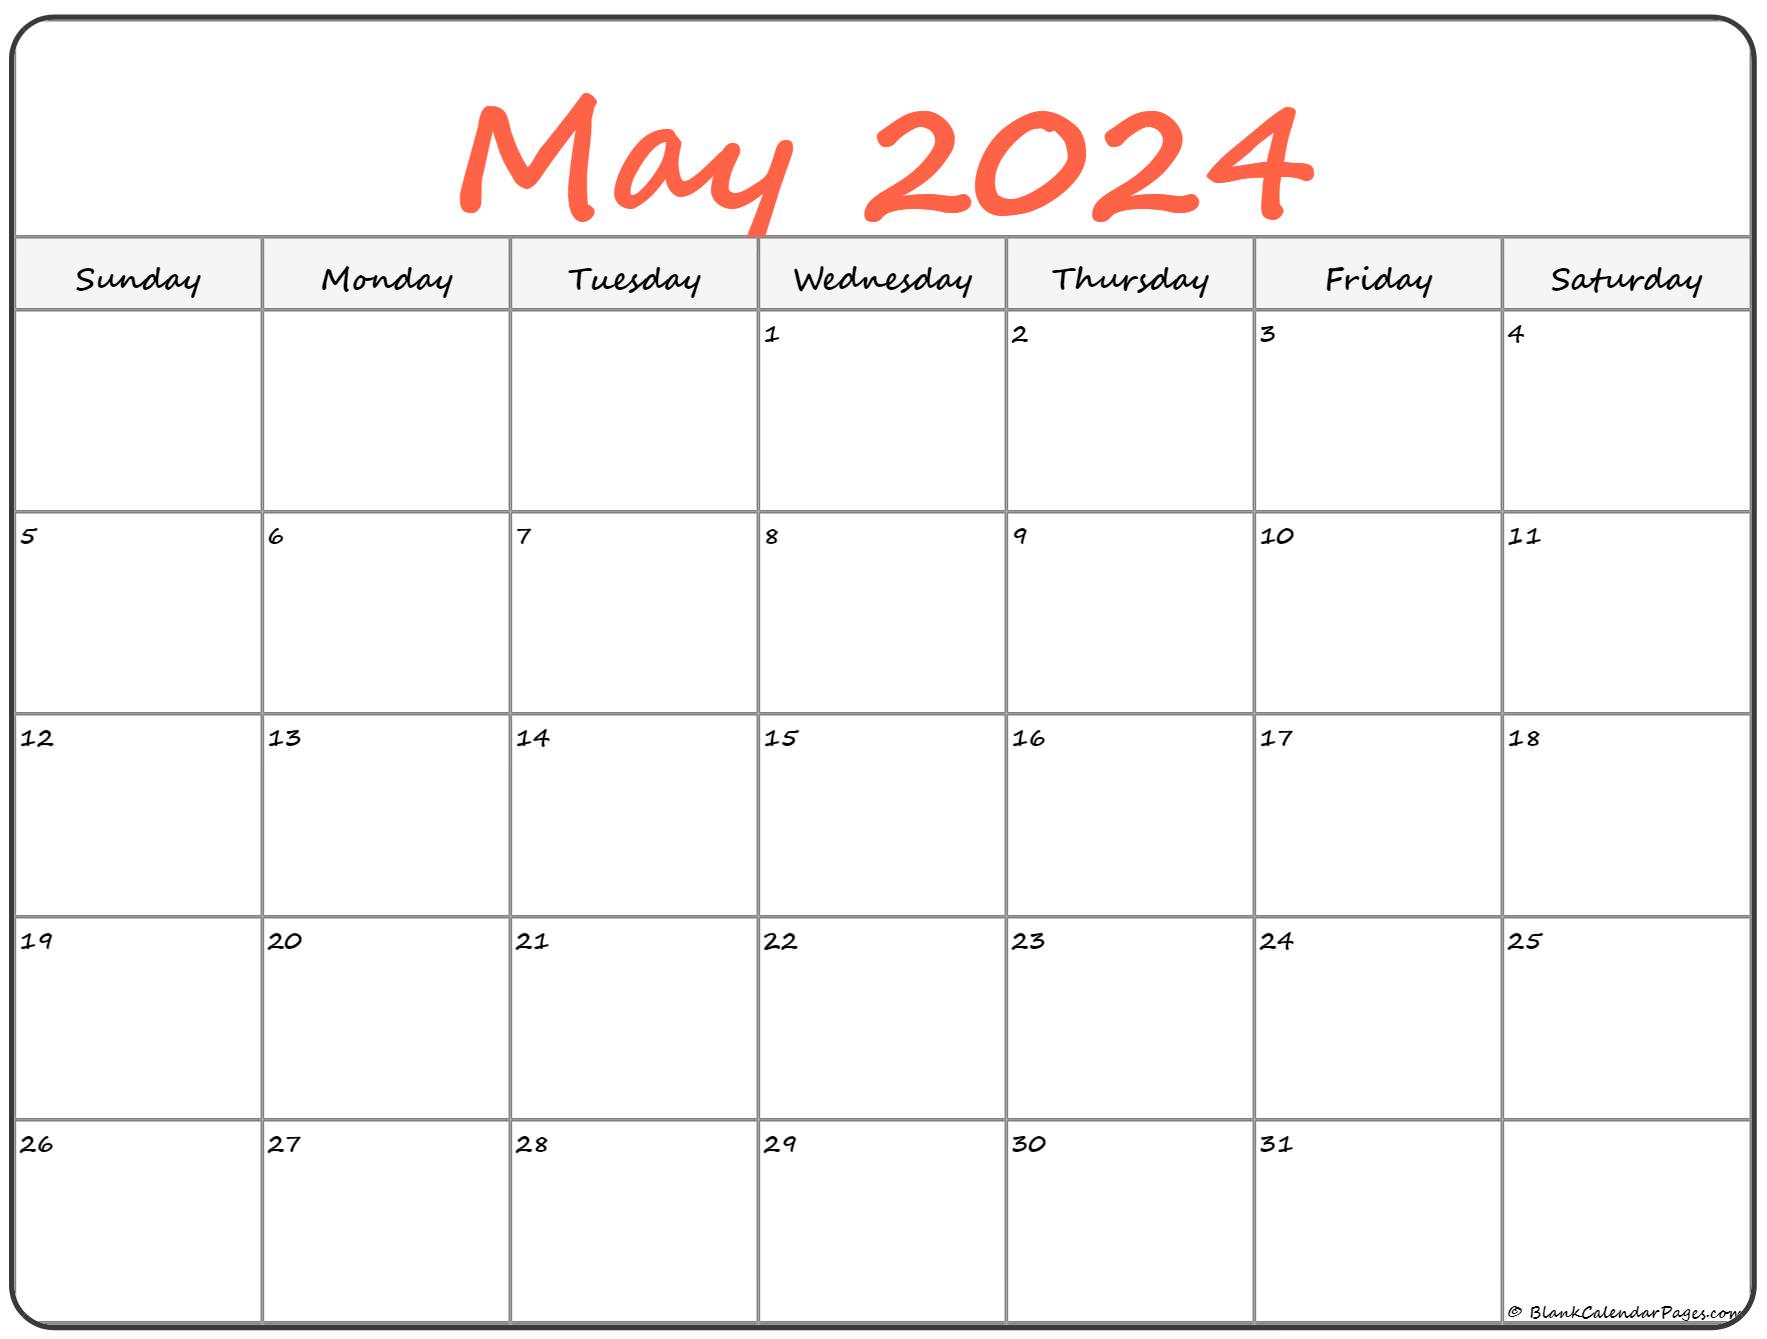 May 2024 calendar free printable calendar